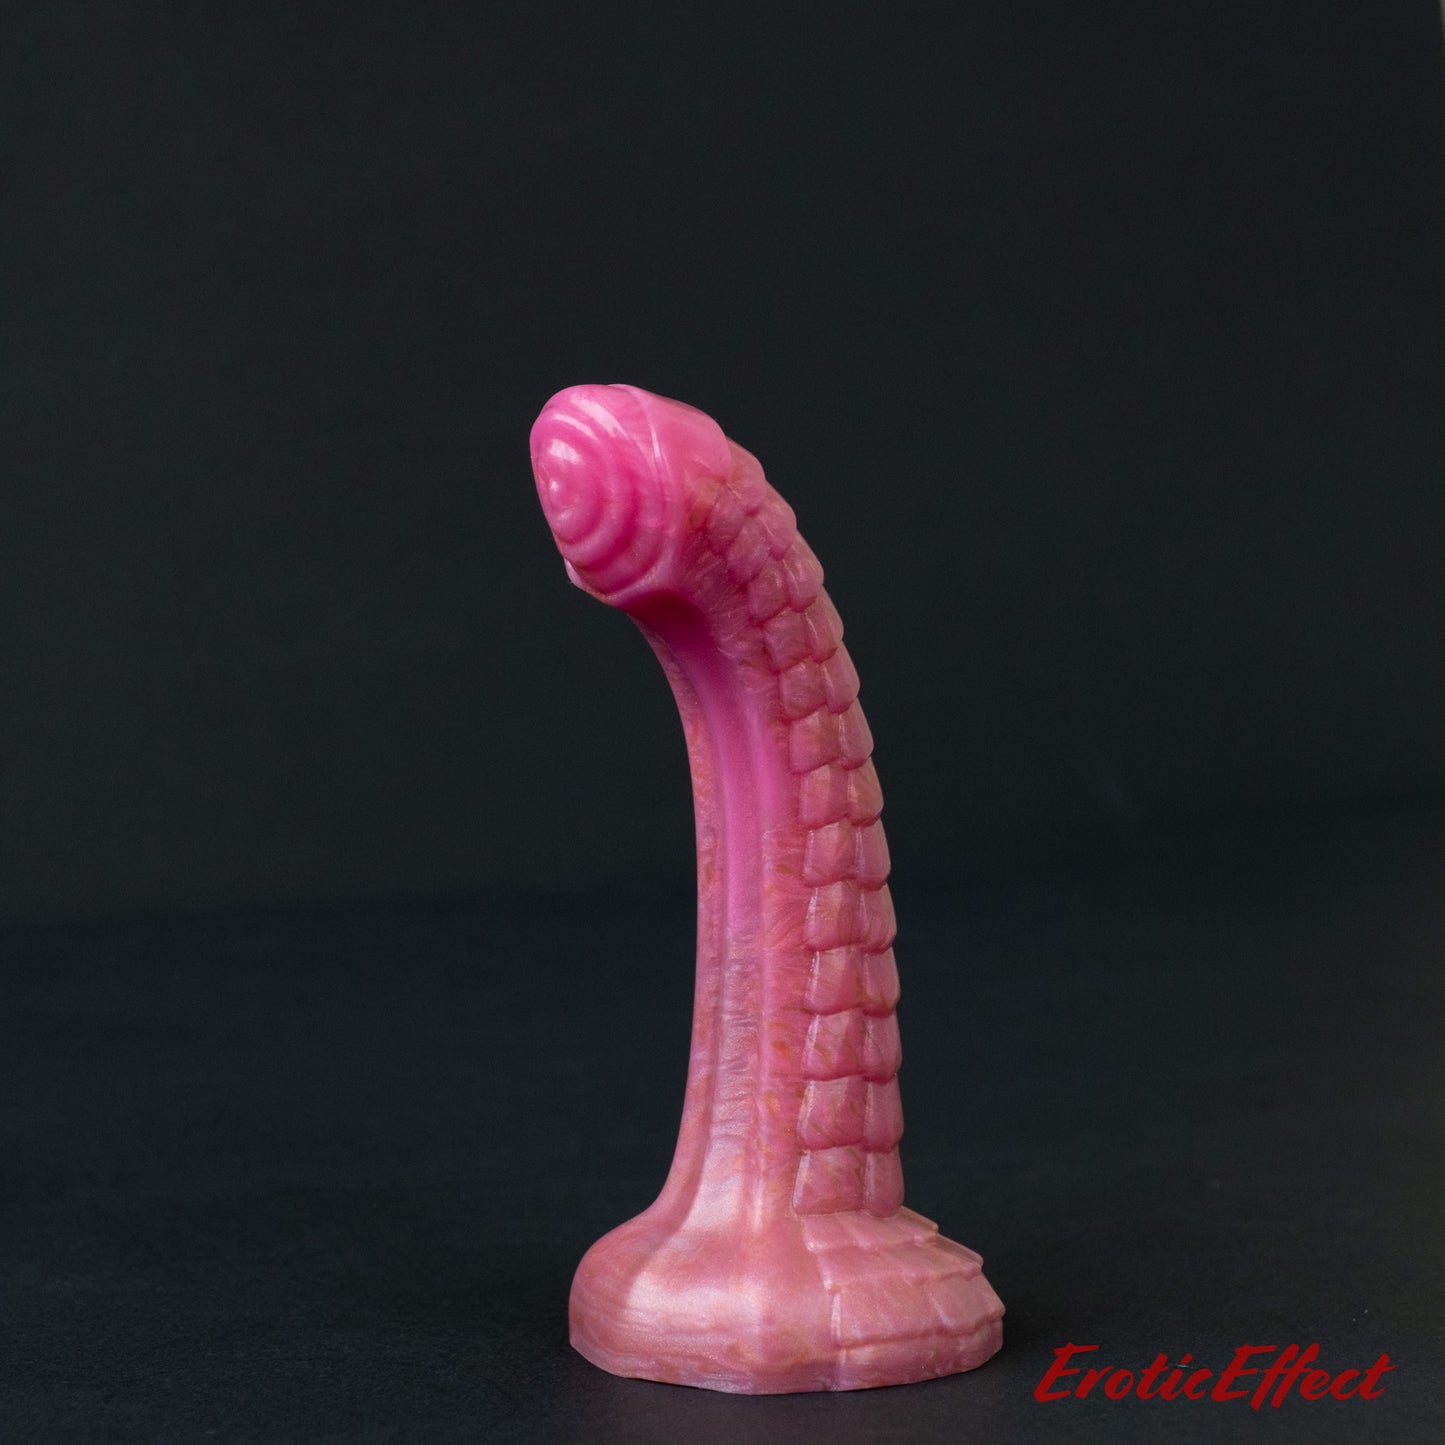 Raithor Dragon Fantasy Silicone Dildo - Small - Medium Firmness - Pink/Red Shimmer